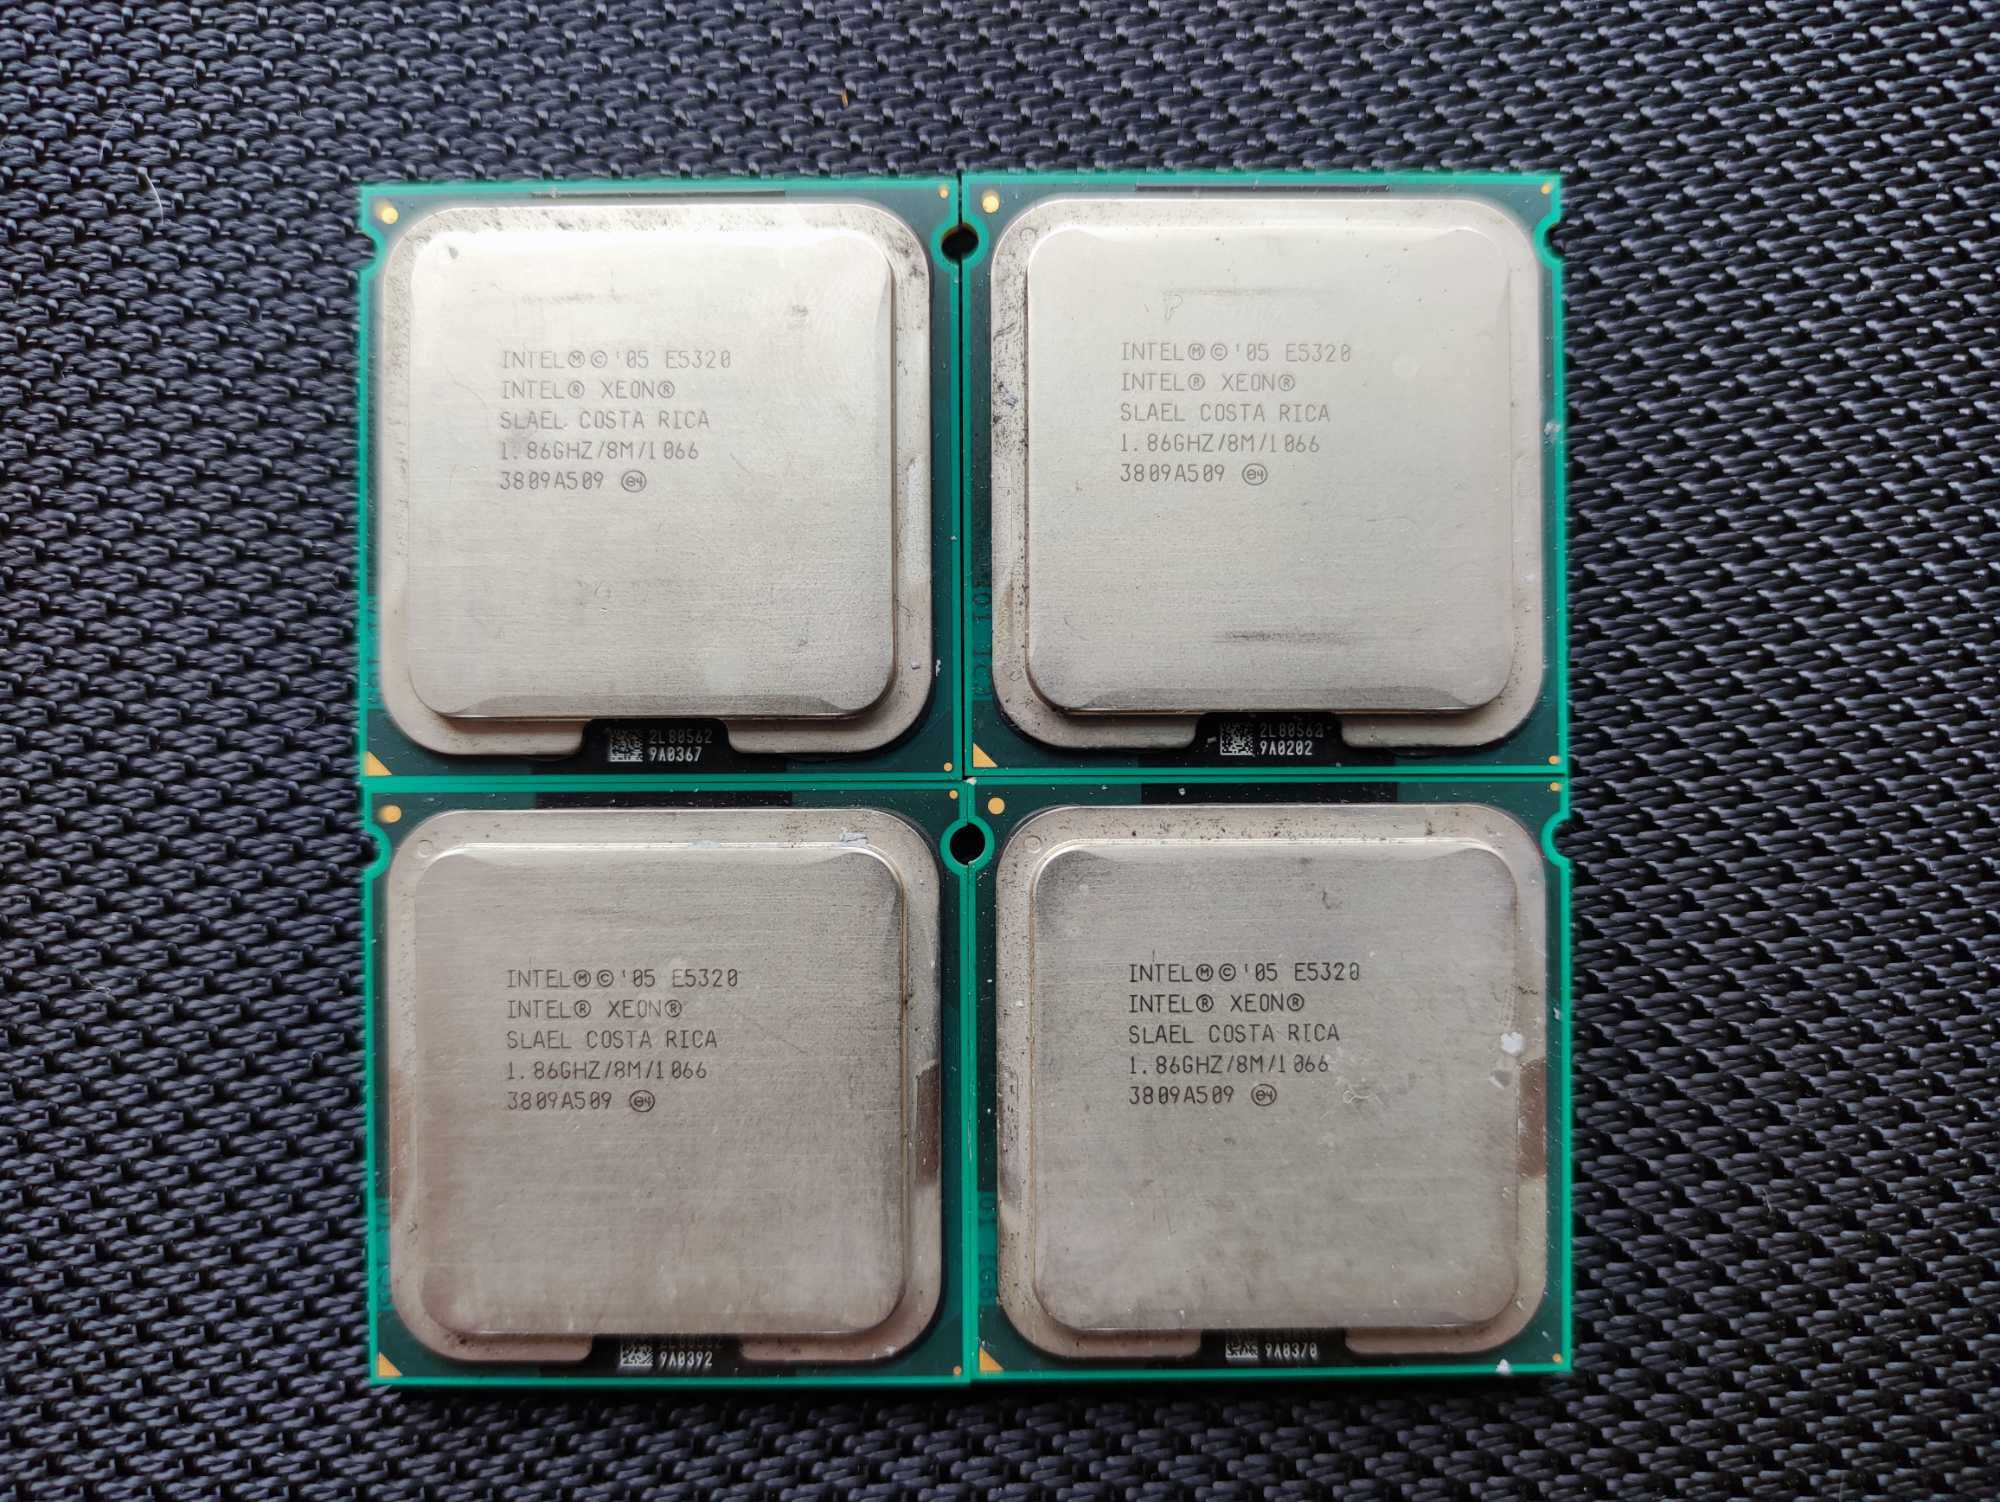 Intel Xeon E5320 8M Cache, 1.86 GHz 4/4